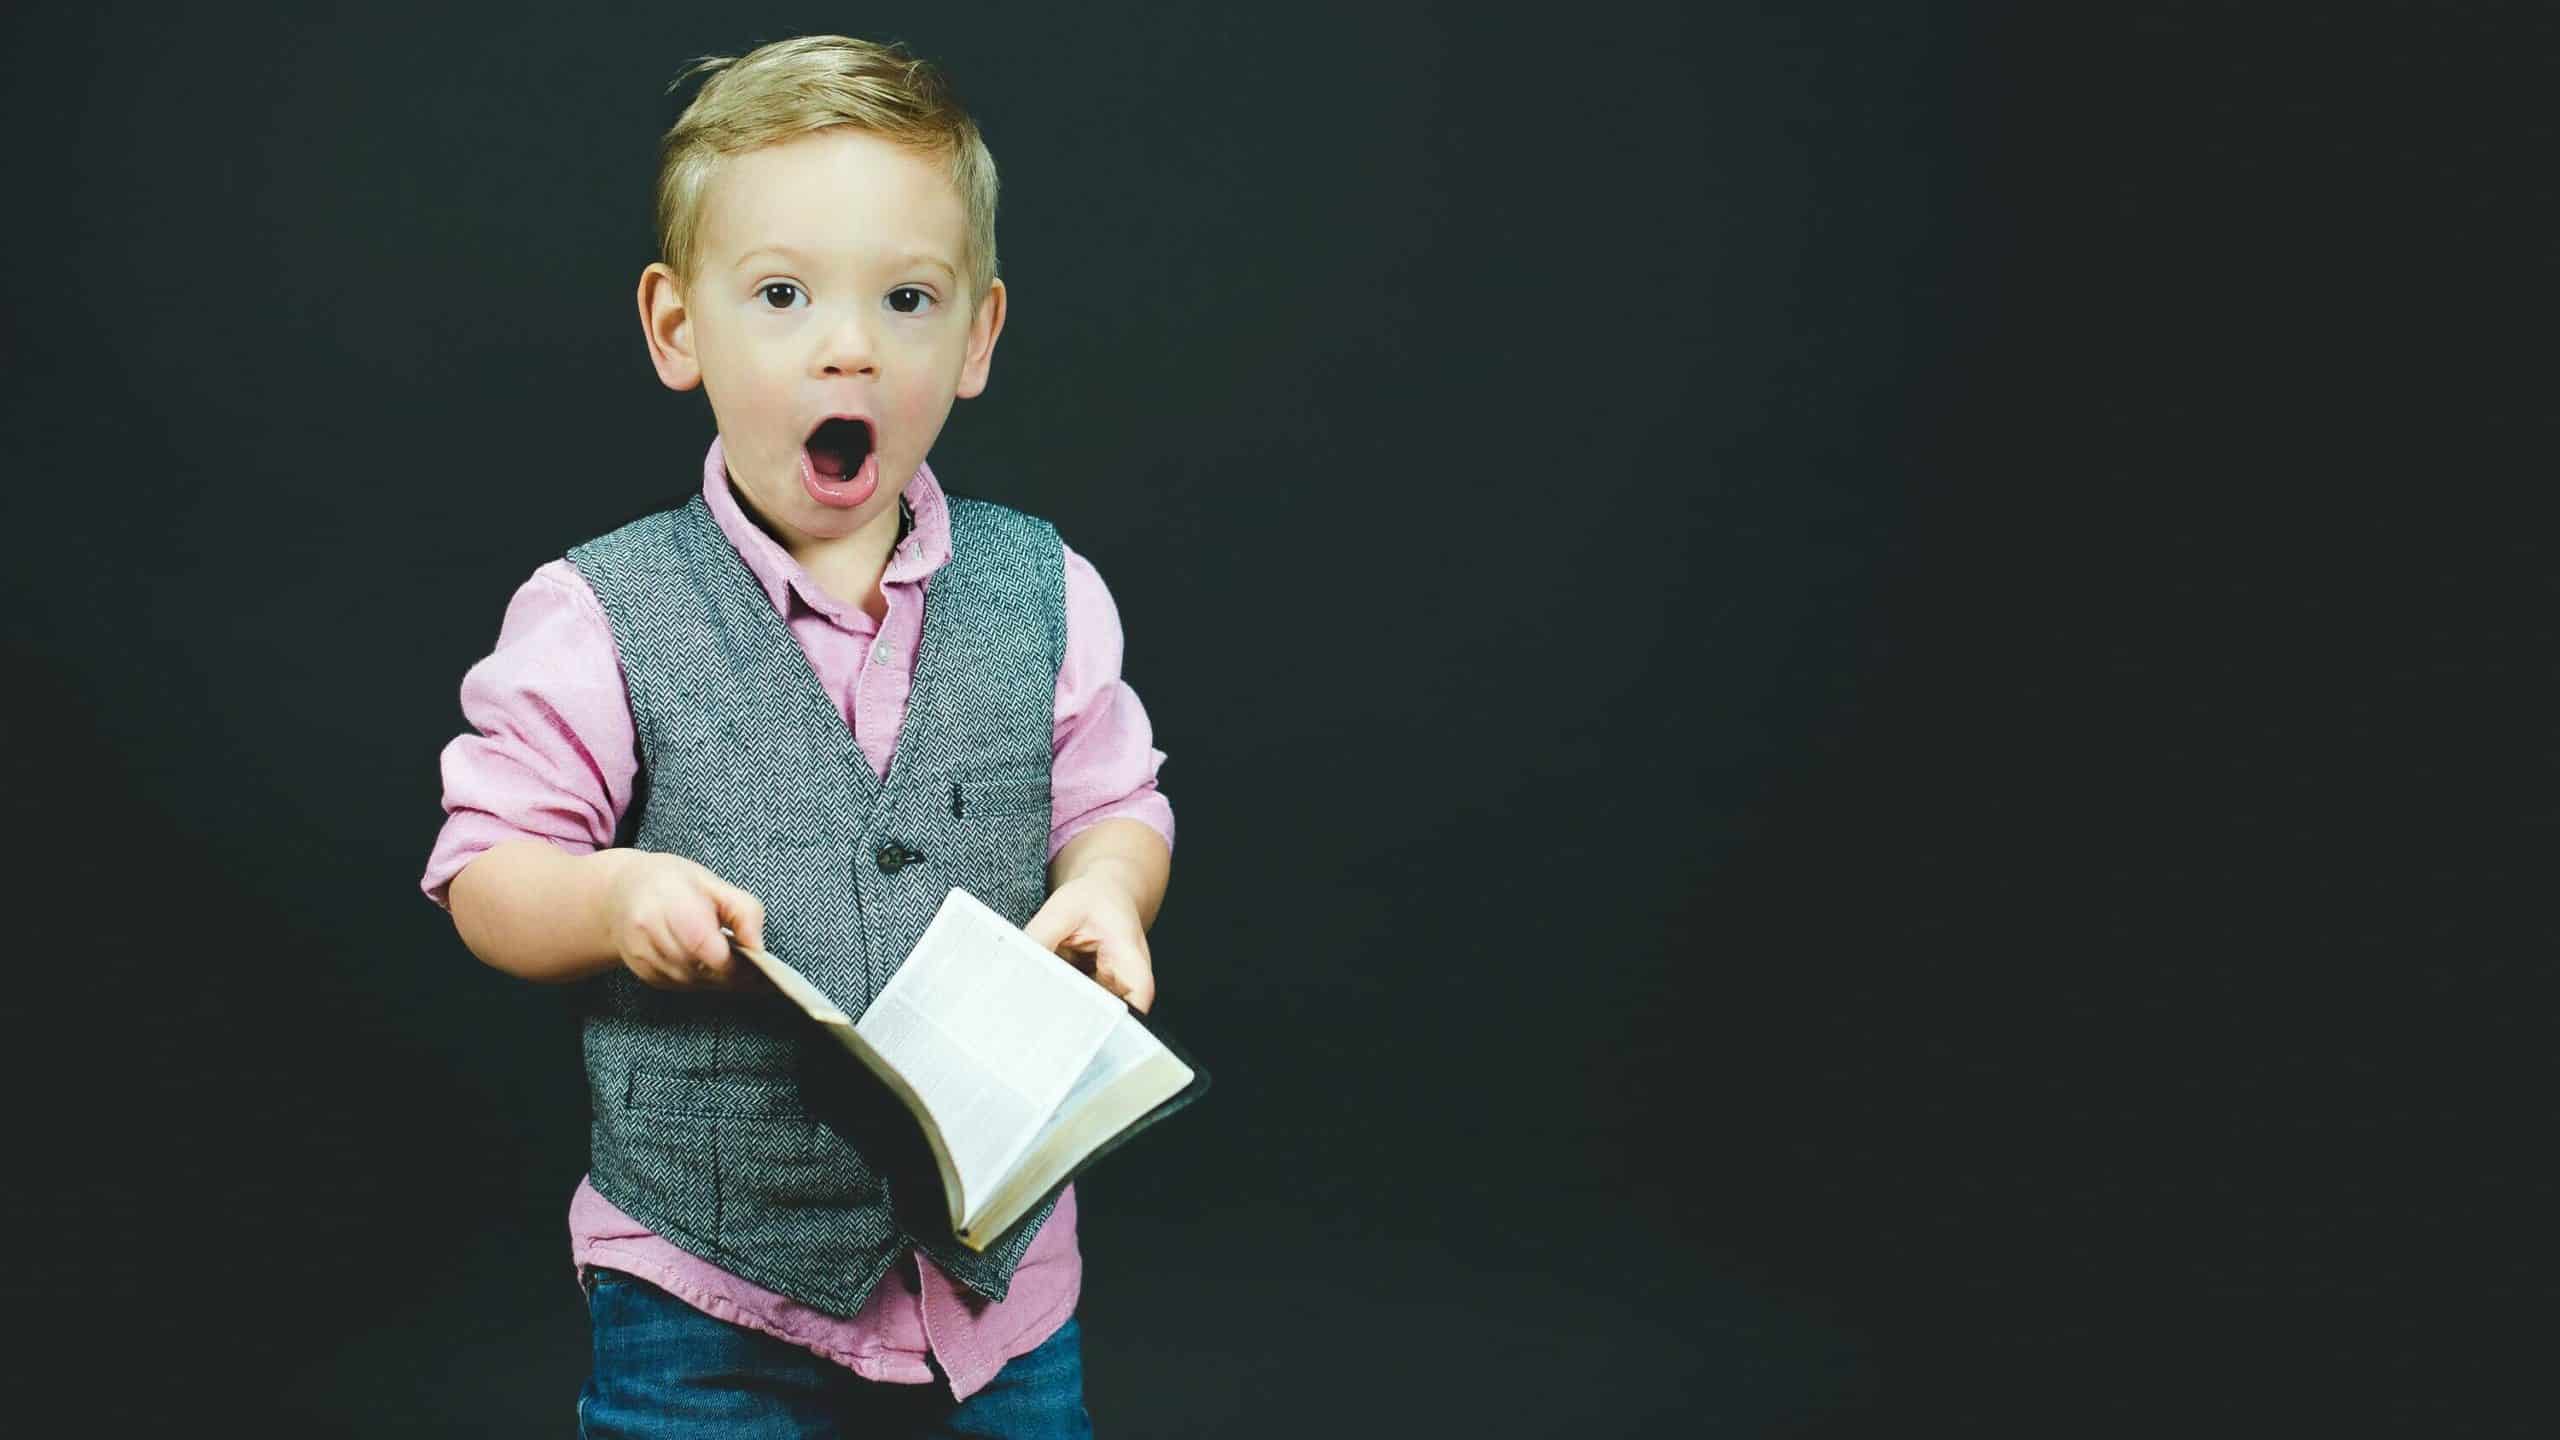 blonde little boy shocked expression holding open book